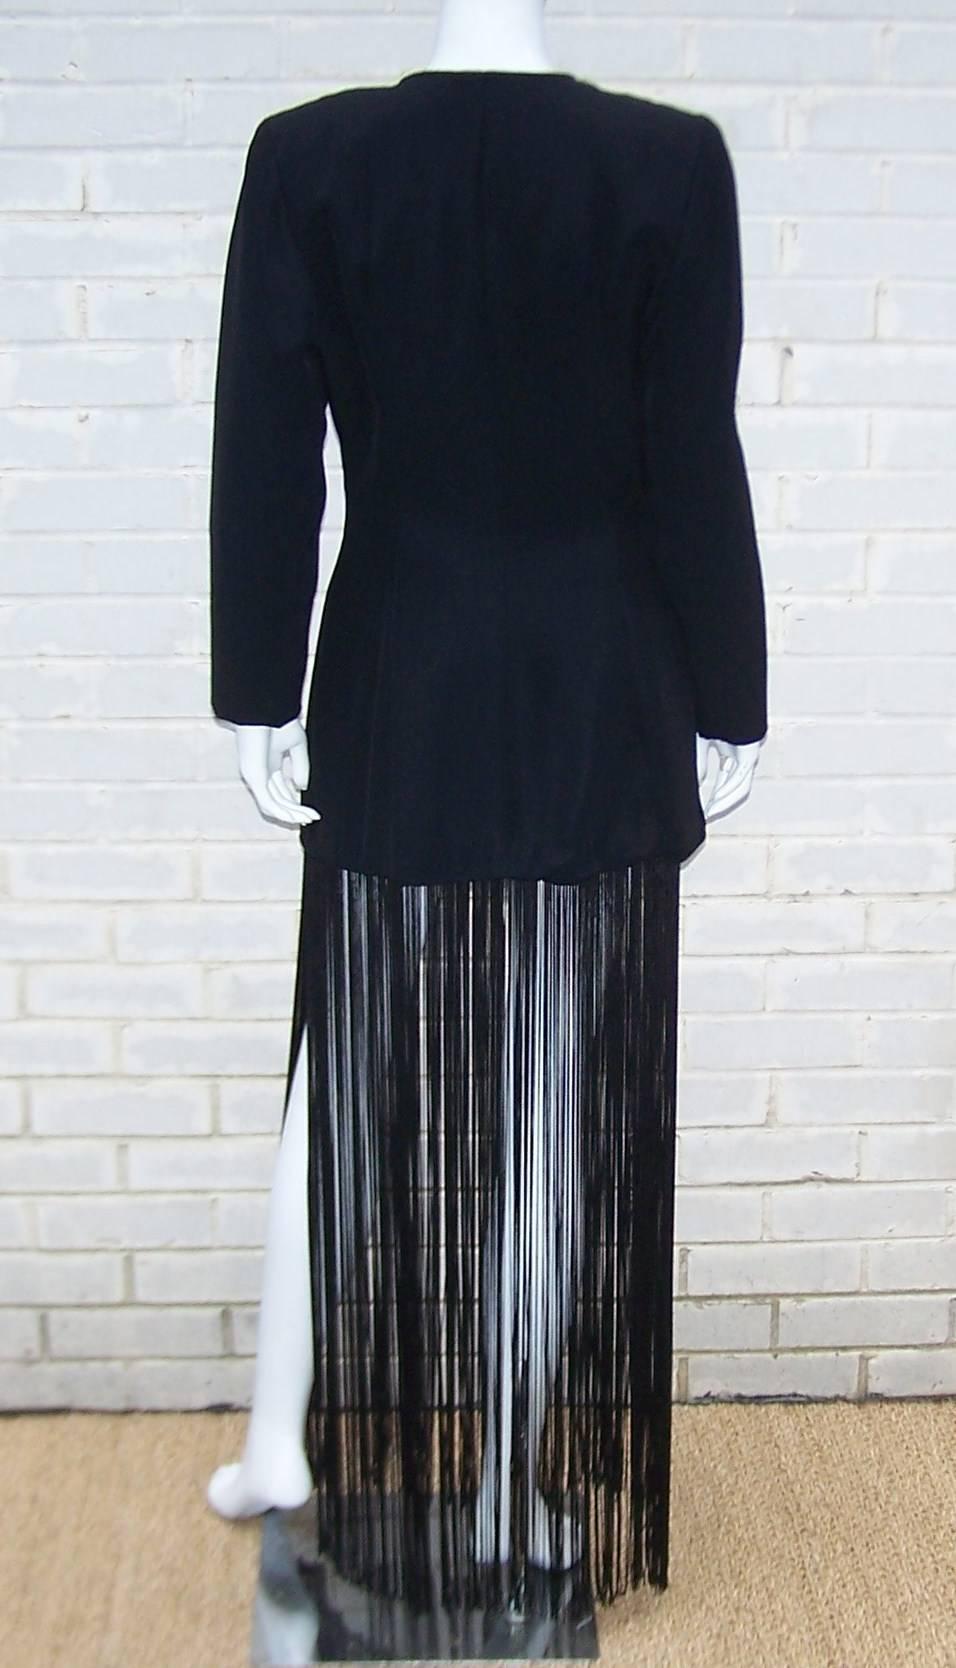 Women's 1980's Black Crepe Jacket or Dress With Fringe Benefits